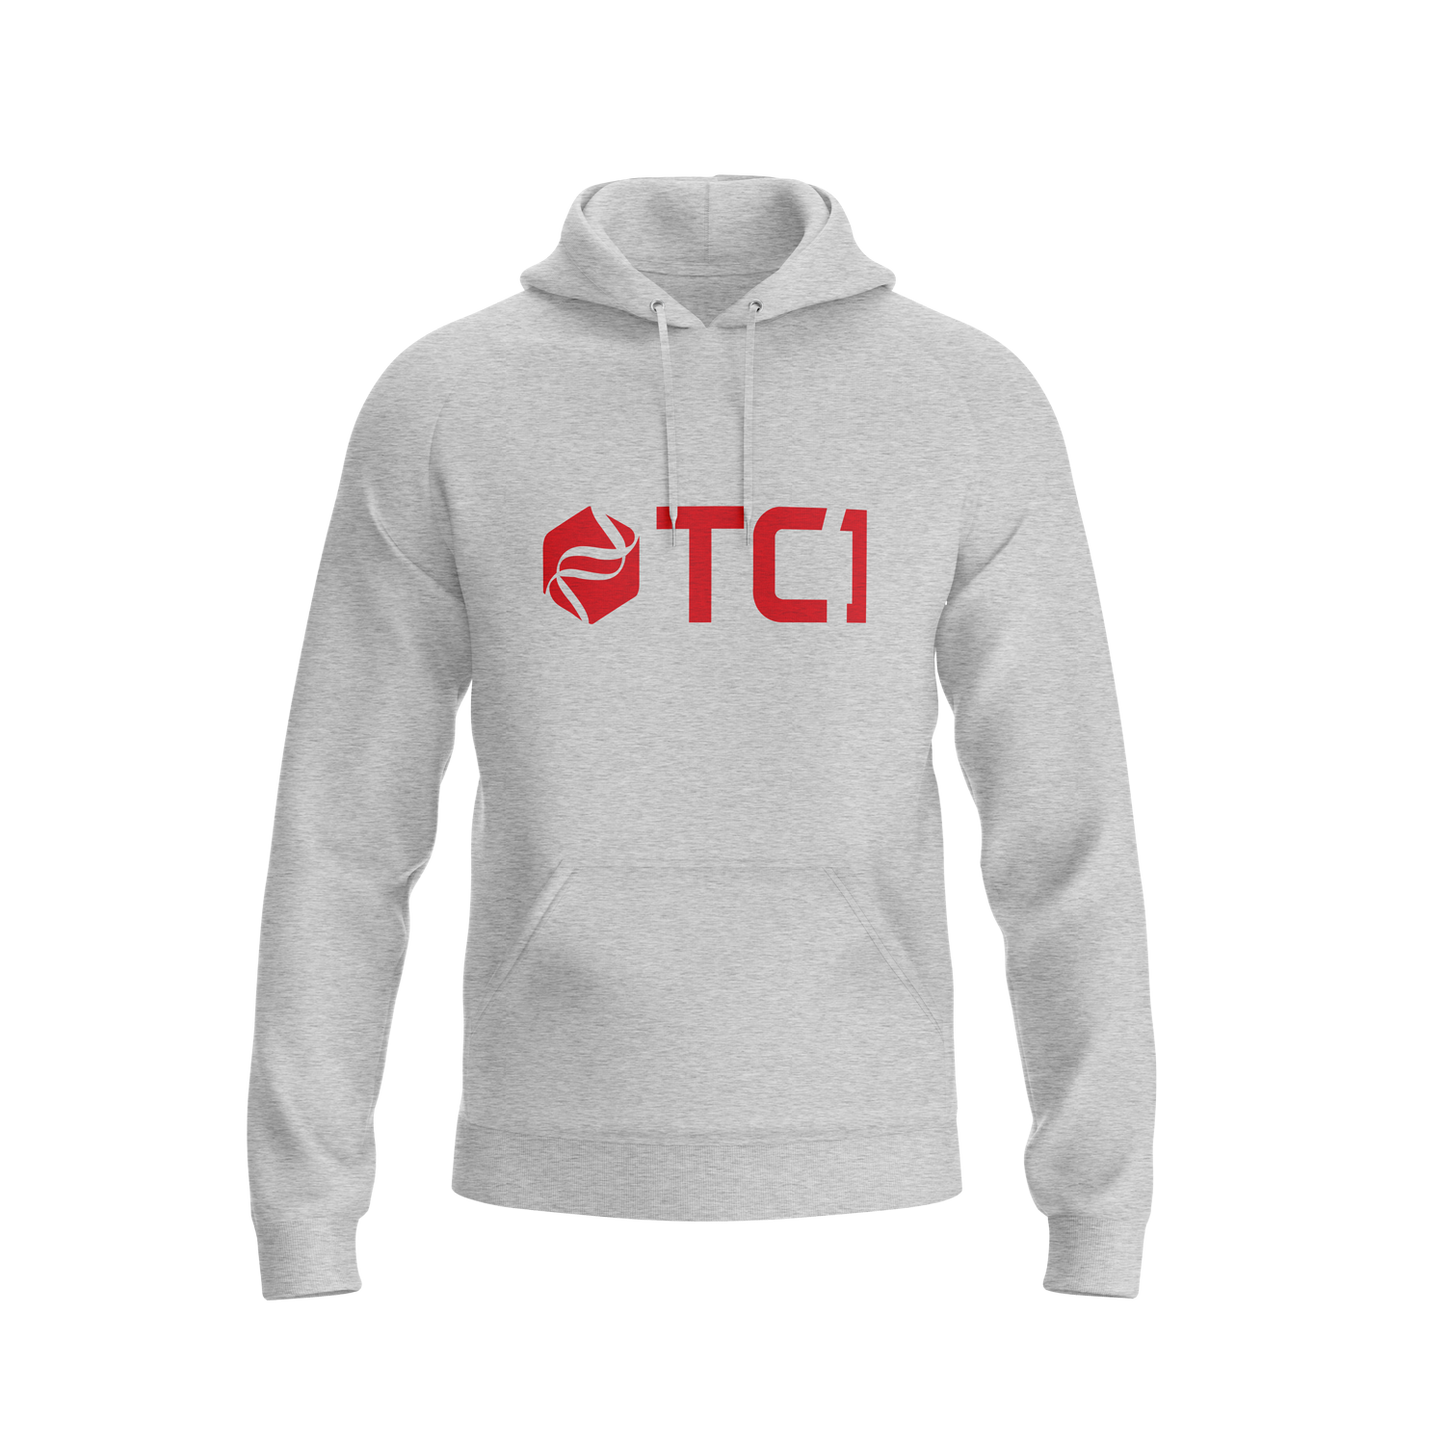 TC1 Grey Hooded Sweatshirt - Classic Comfort with Modern Style